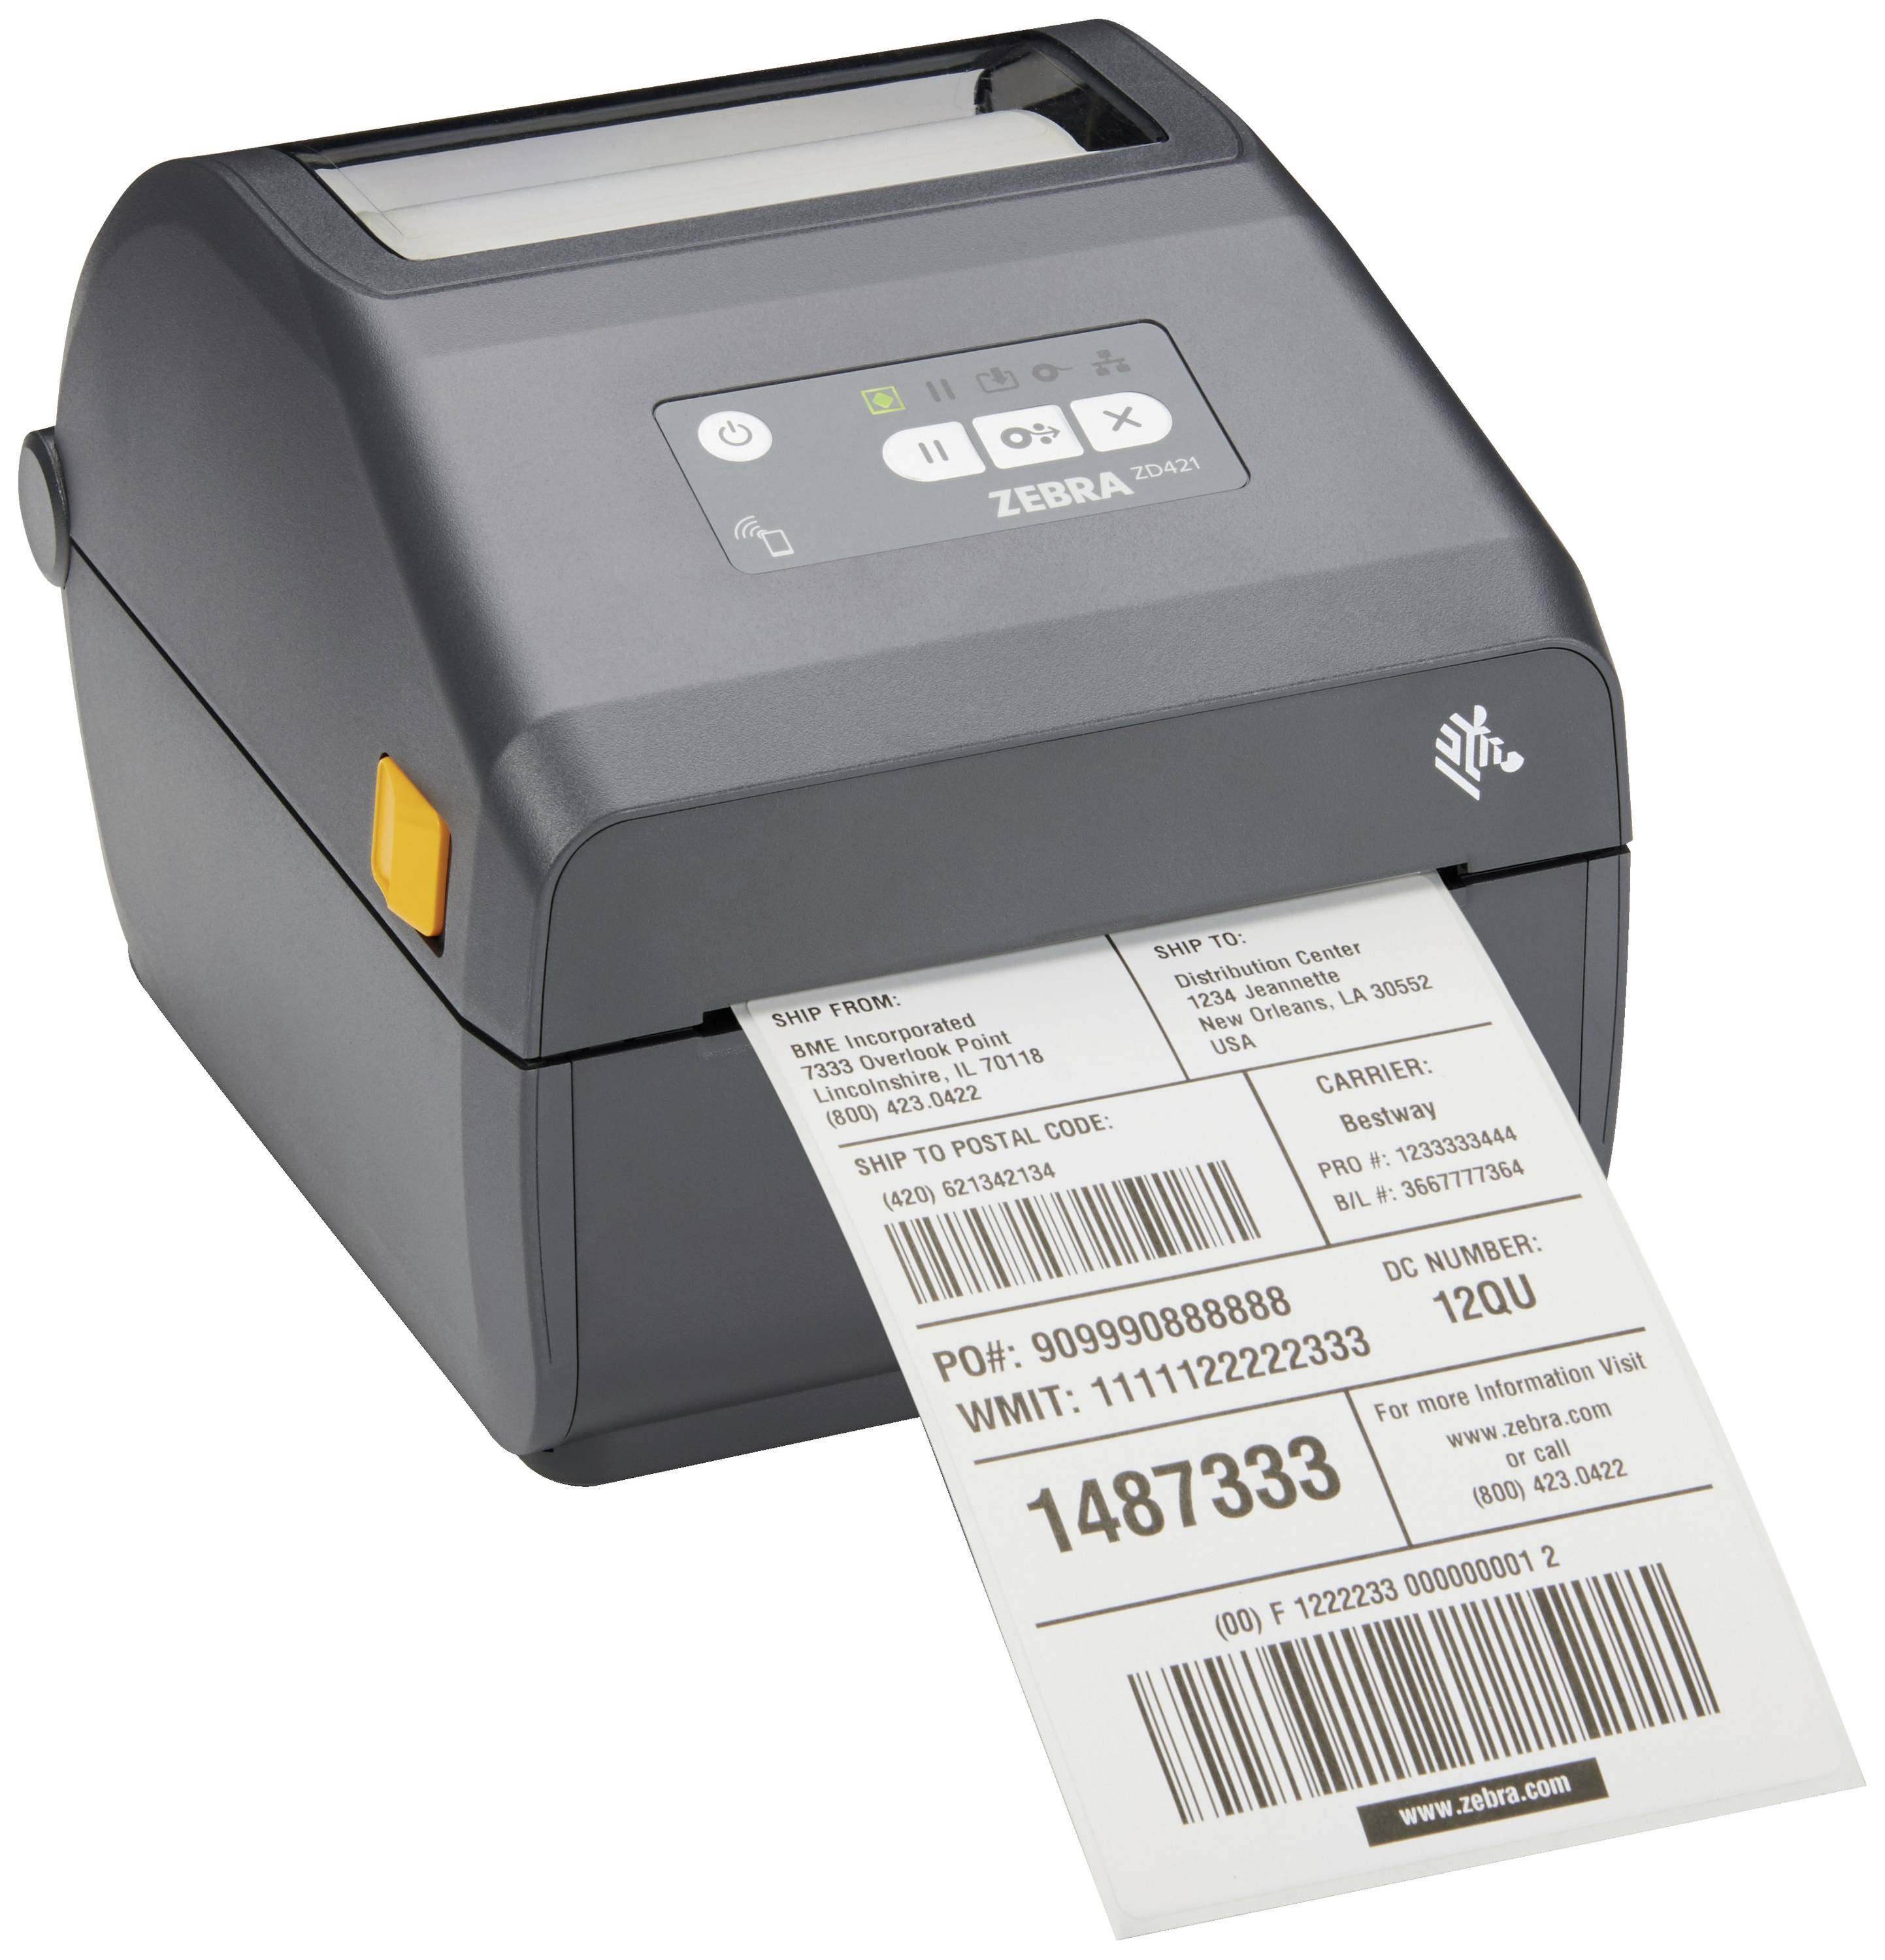 Zebra Zd421c Etiketprinter Direkte Termo Termooverførsel 203 X 203 Dpi Etiketbredde Maks 9624